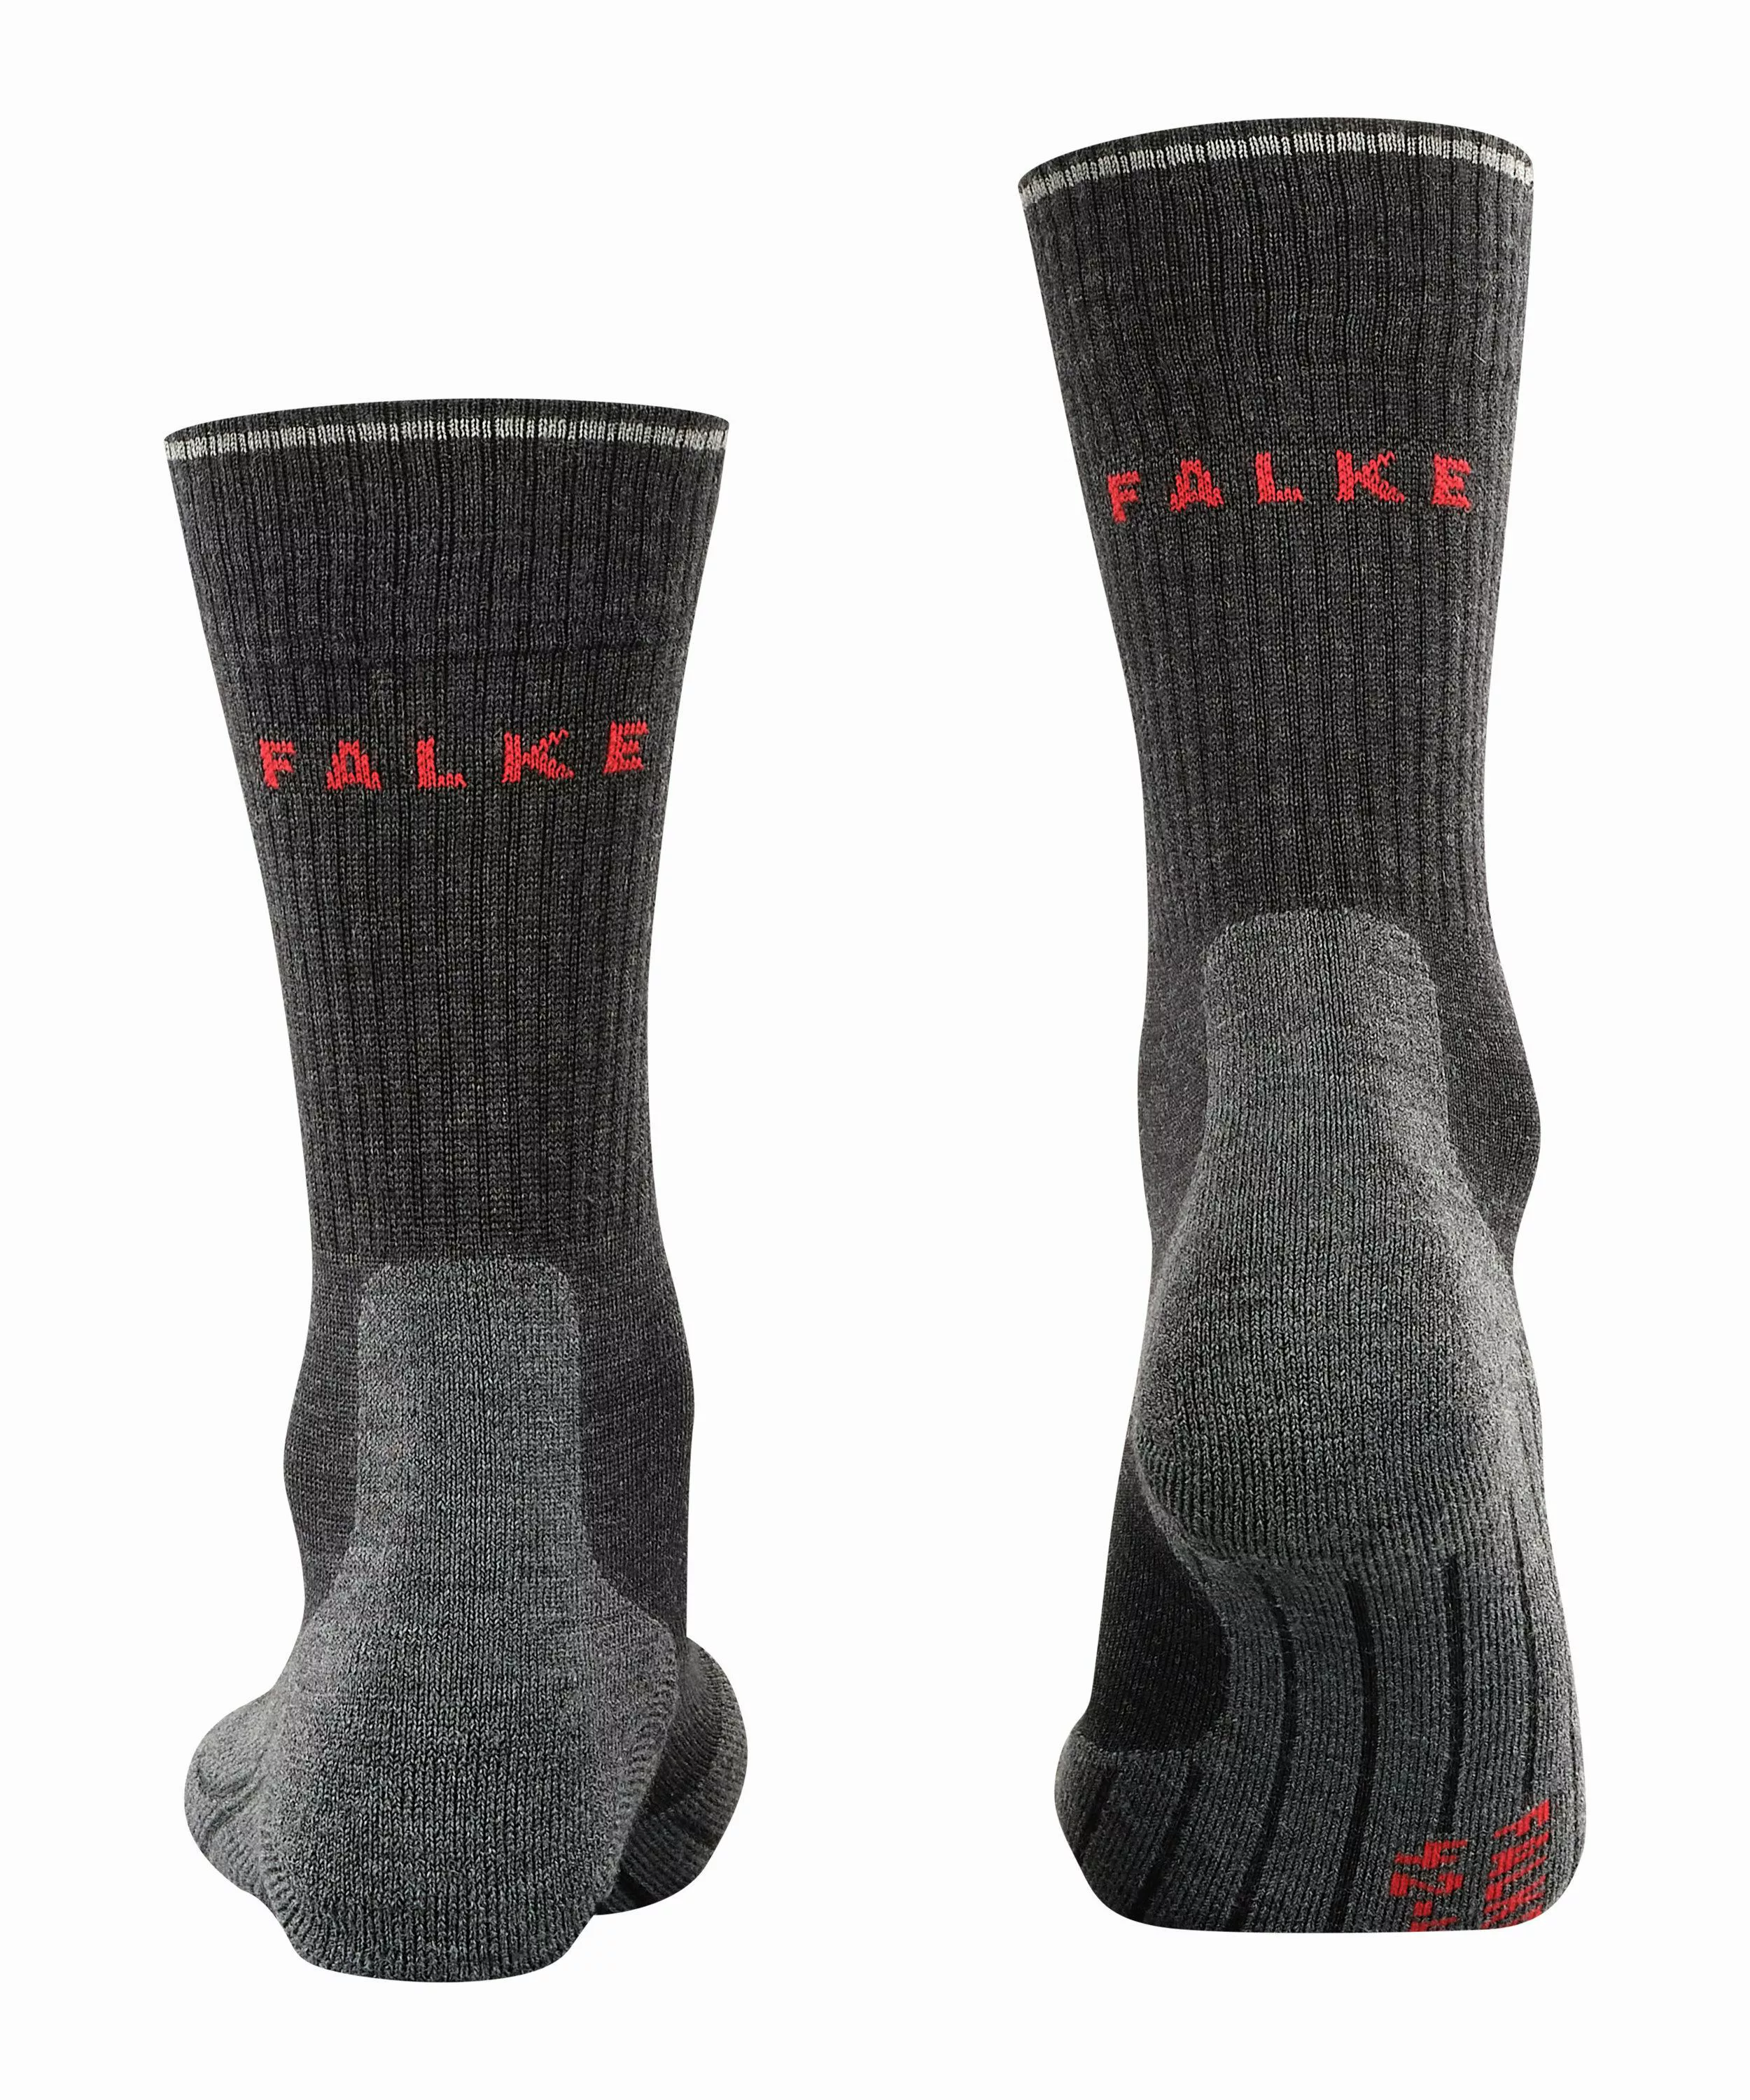 FALKE TK2 Wool Silk Herren Wandersocken, 42-43, Grau, Schurwolle, 16355-308 günstig online kaufen